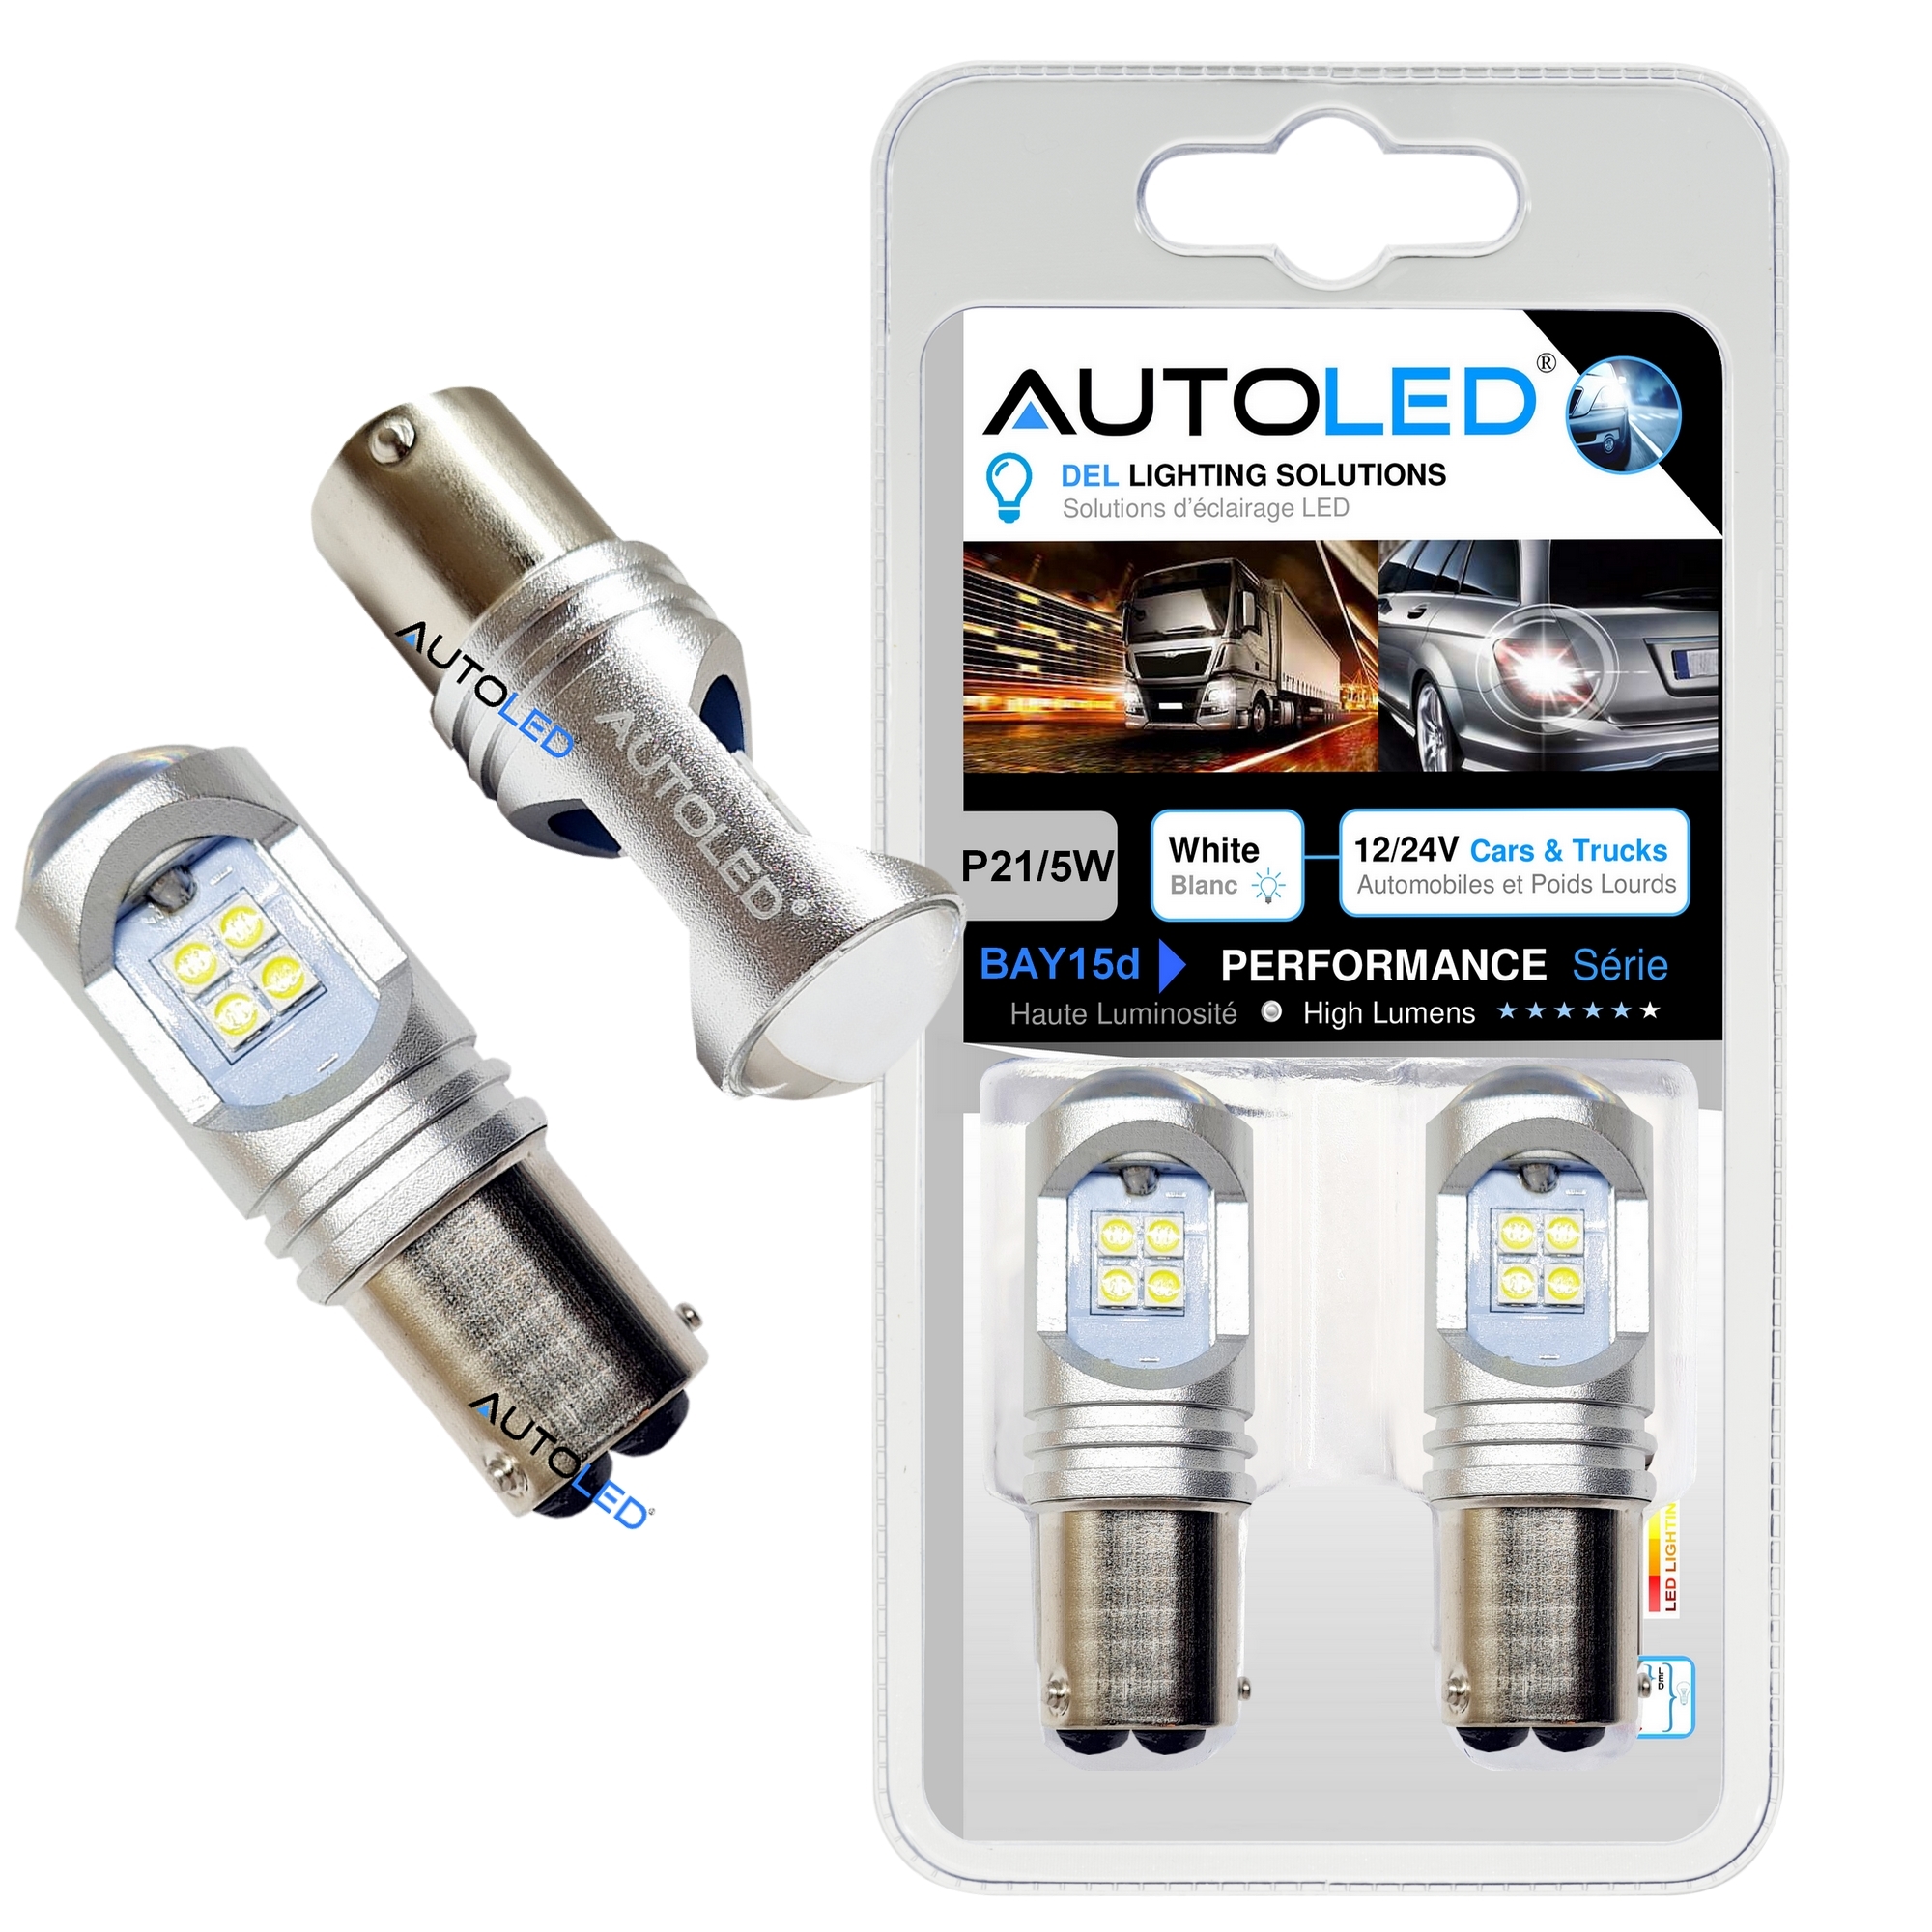 Ampoule P21/5W LED 24v /12v, Forte luminosité